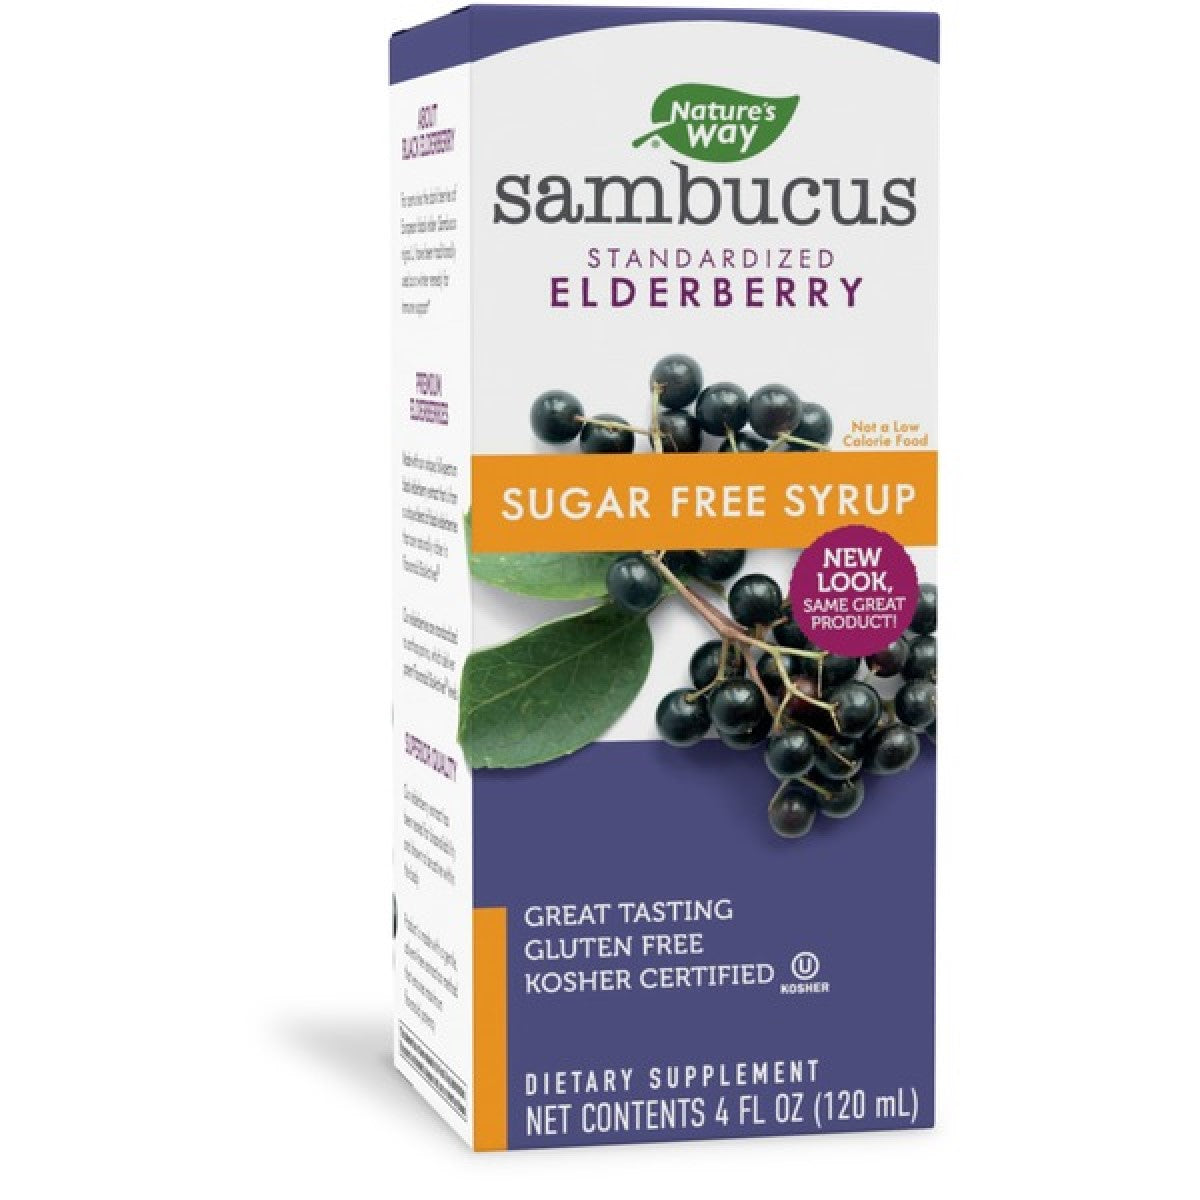 Primary image of Sambucus Sugar-Free Syrup